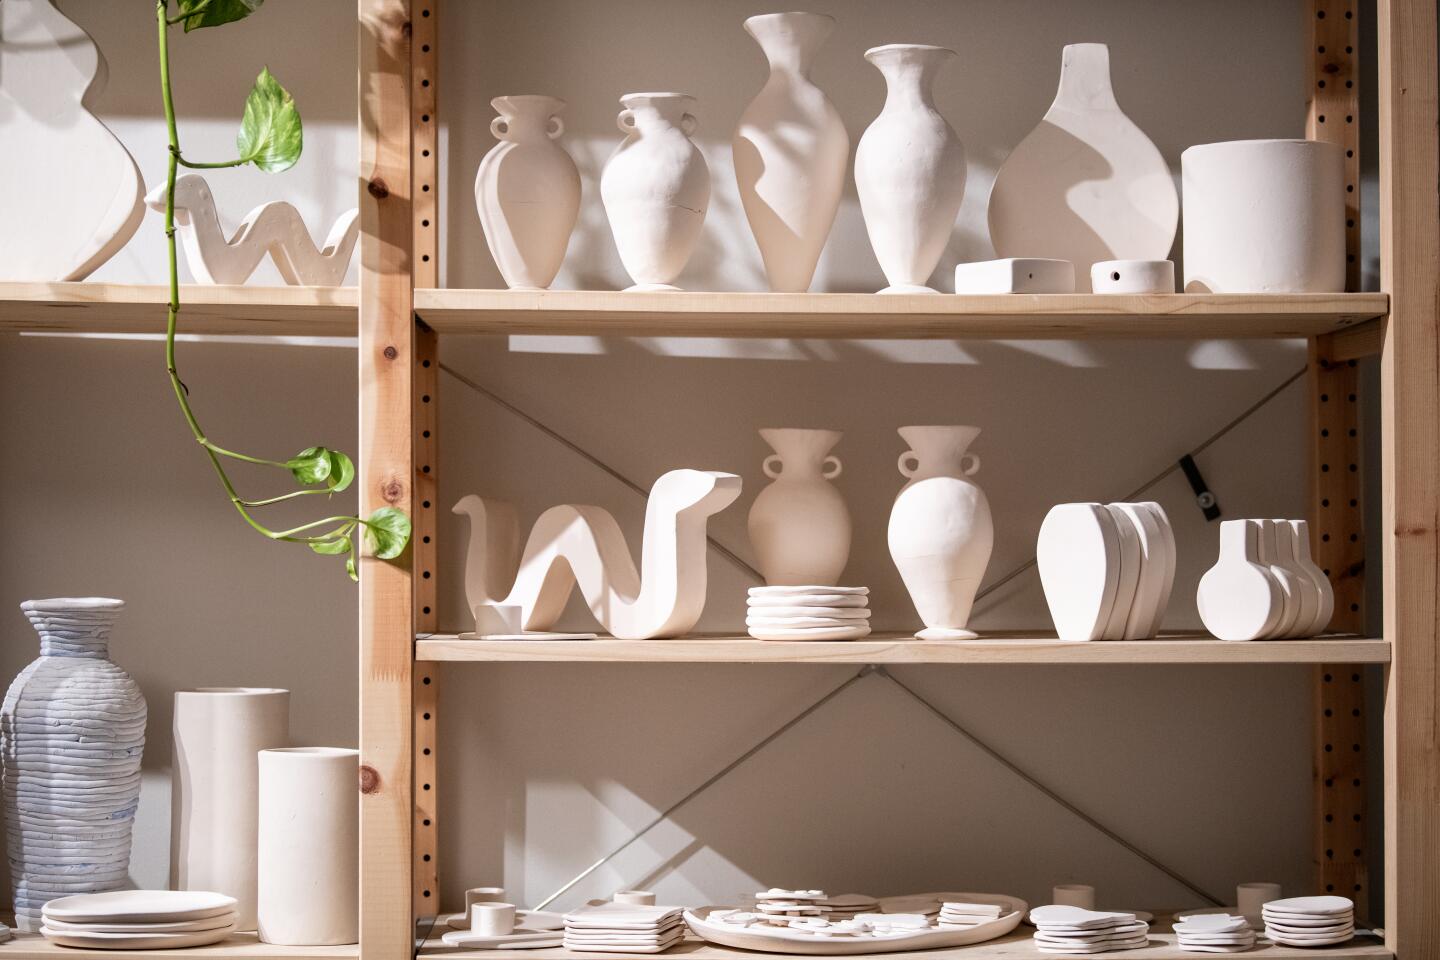 Unfinished pieces dry on shelves inside the Kreep Ceramics studio.